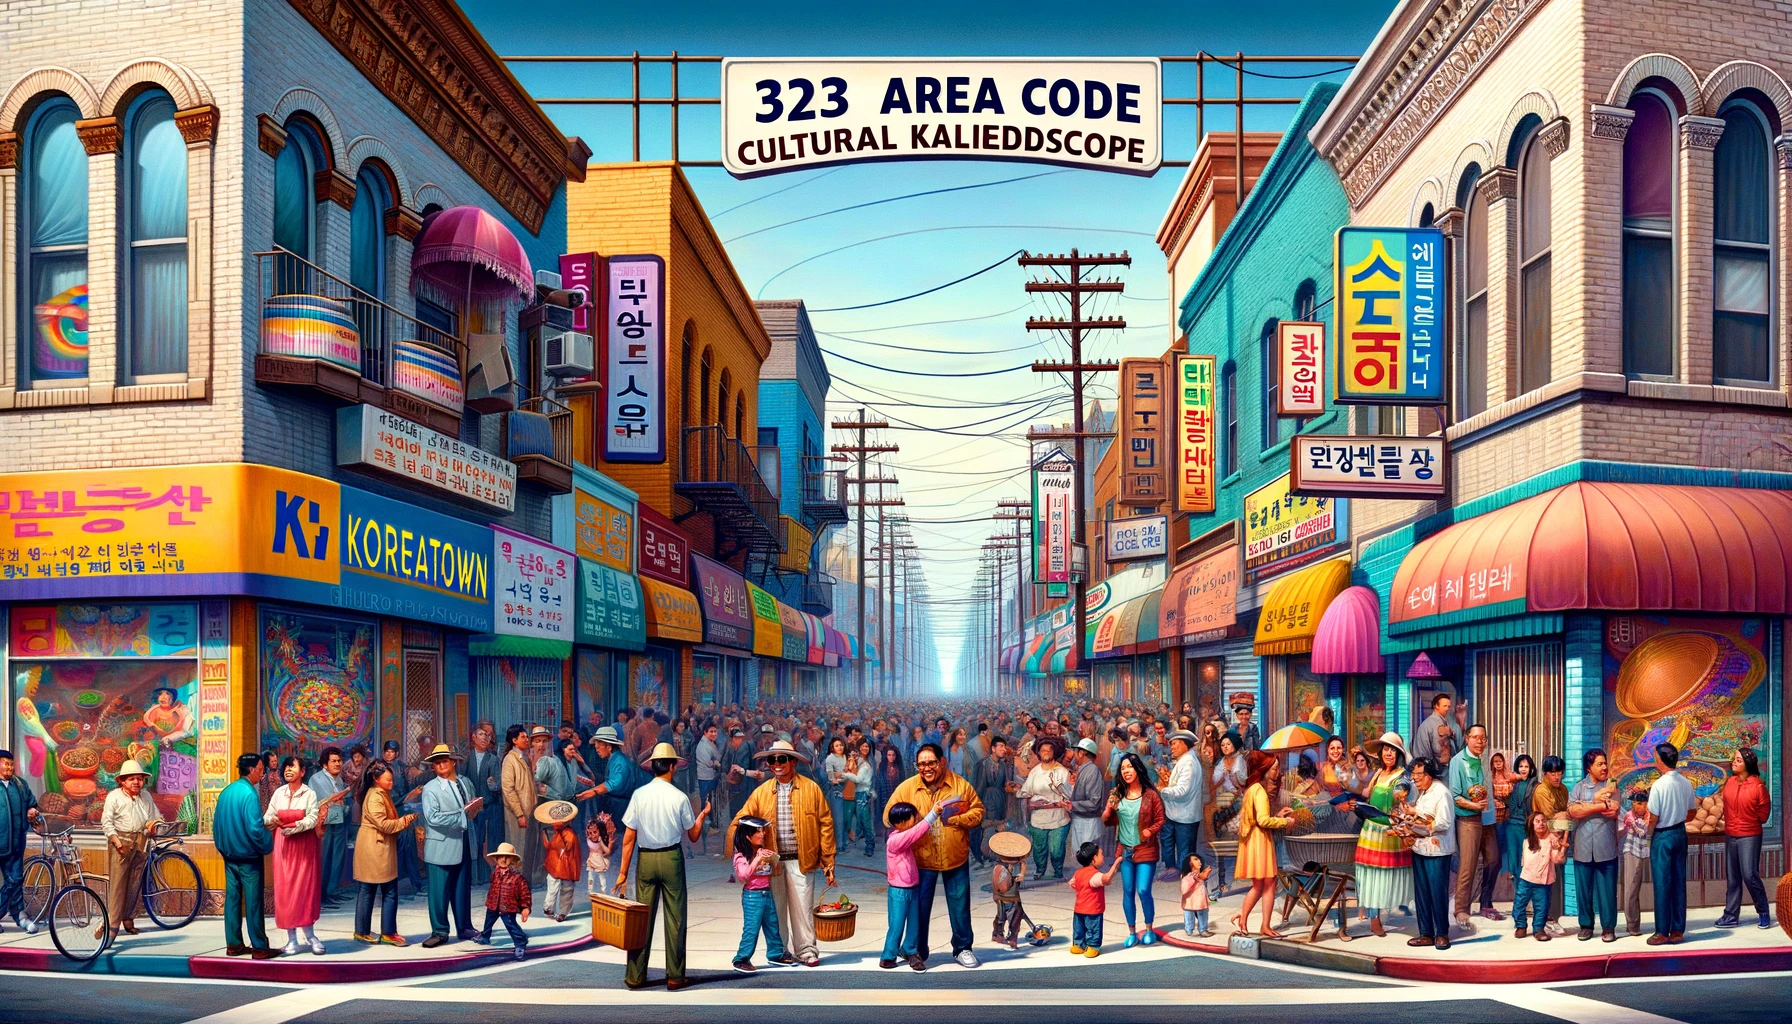 Cultural Kaleidoscope: Diversity in the 323 Area Code